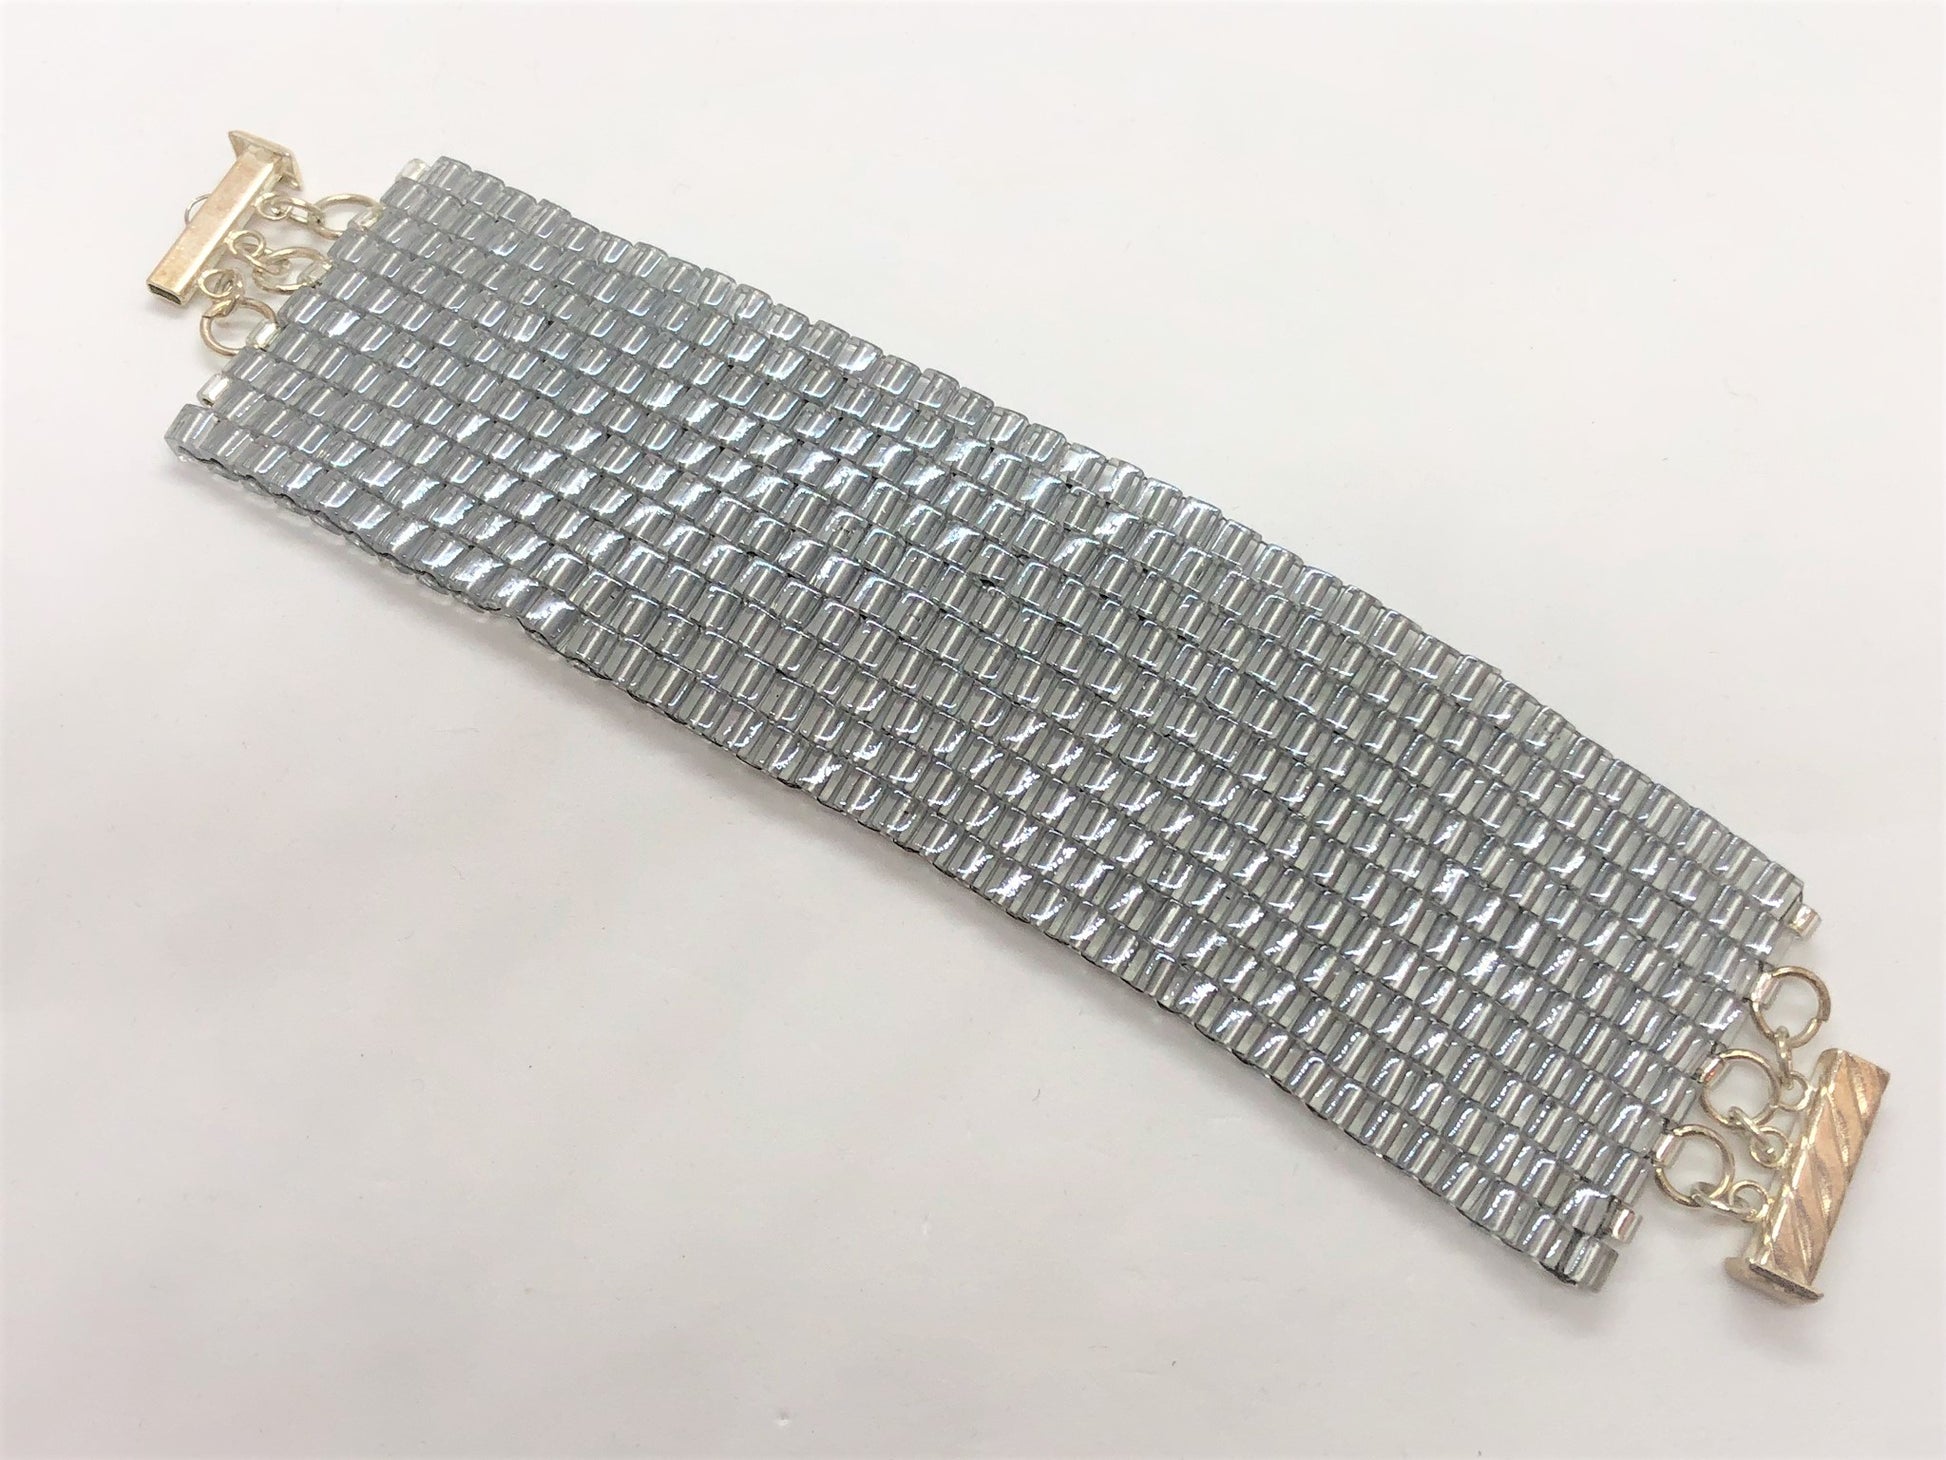 Glass Wall Handsewn Bracelet - Emmis Jewelry, Bracelet, [product_color]